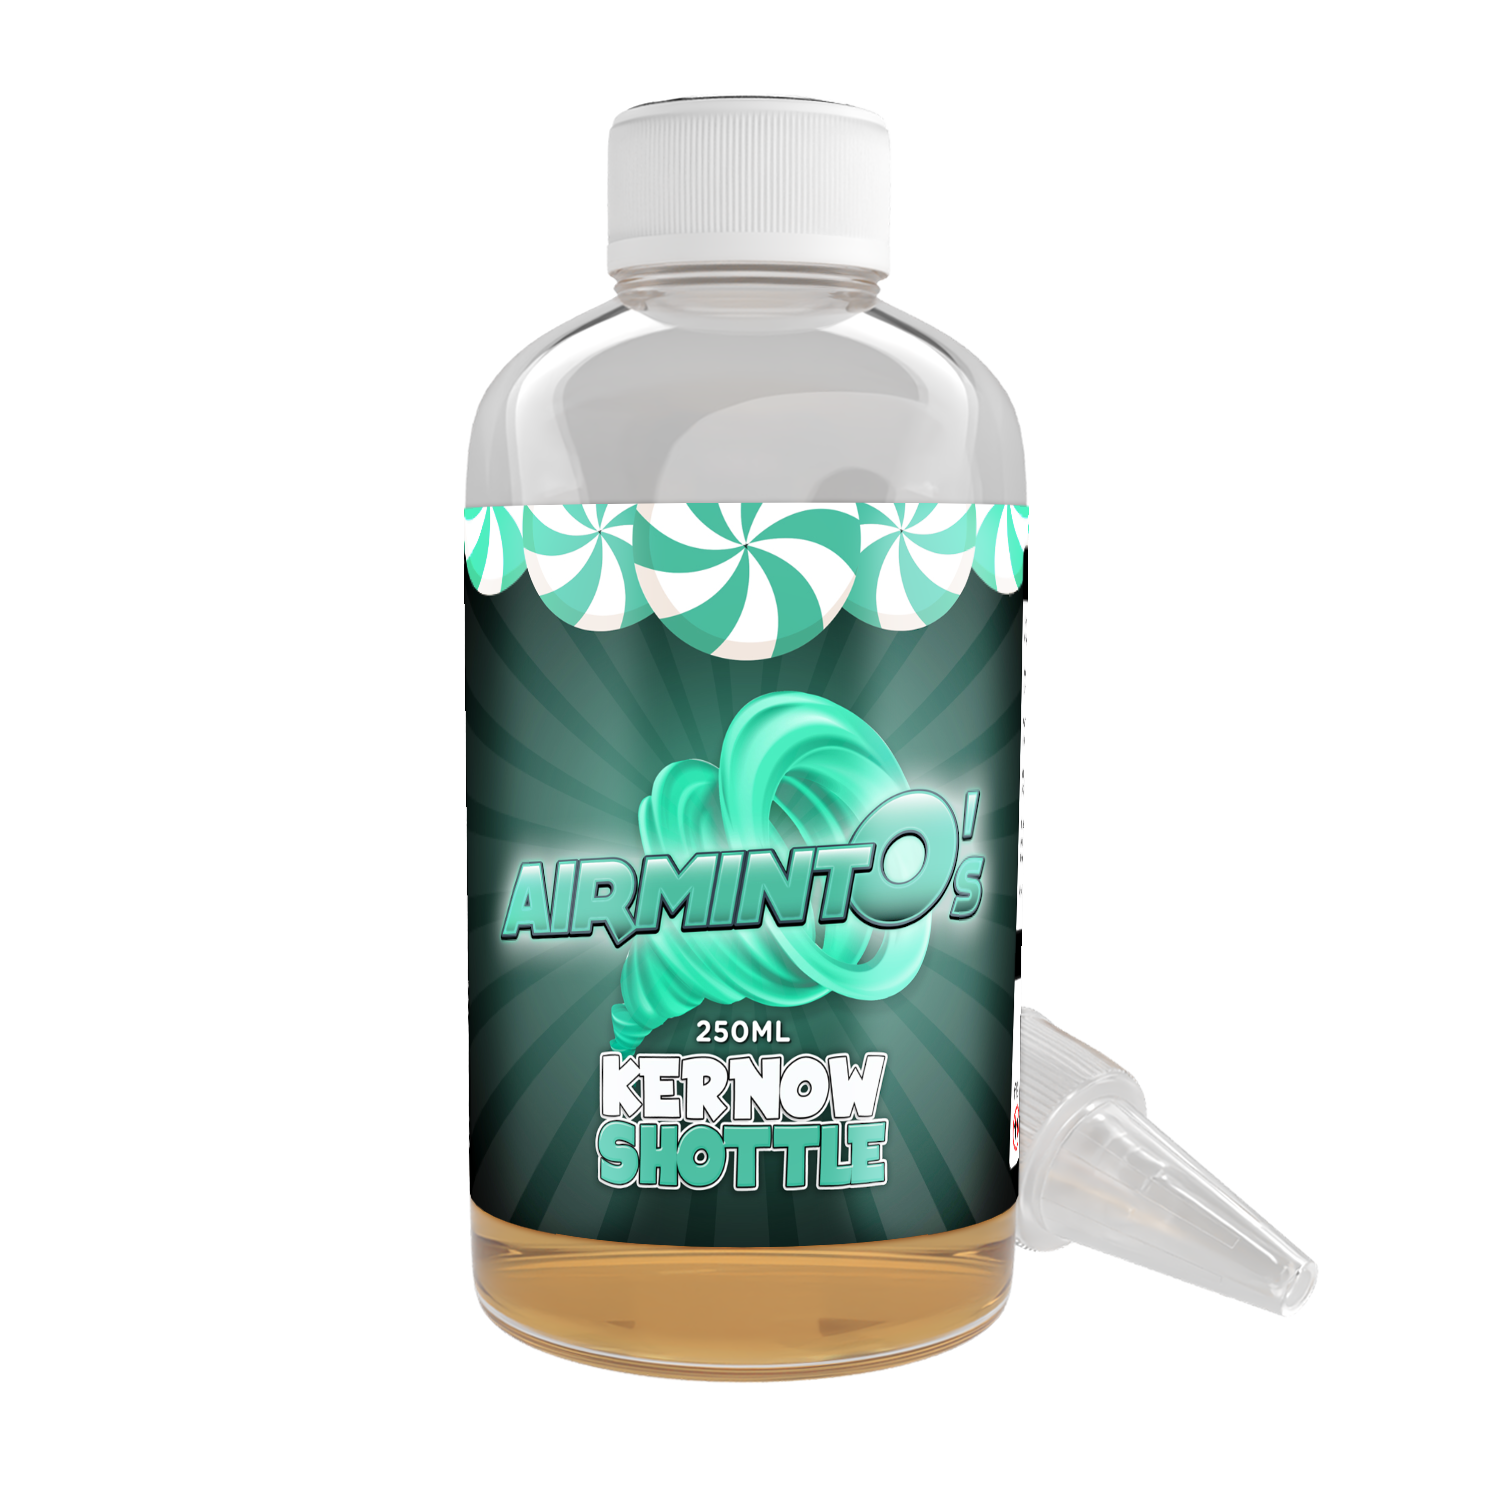 Air Mint O's Shottle Flavour Shot by Kernow - 250ml